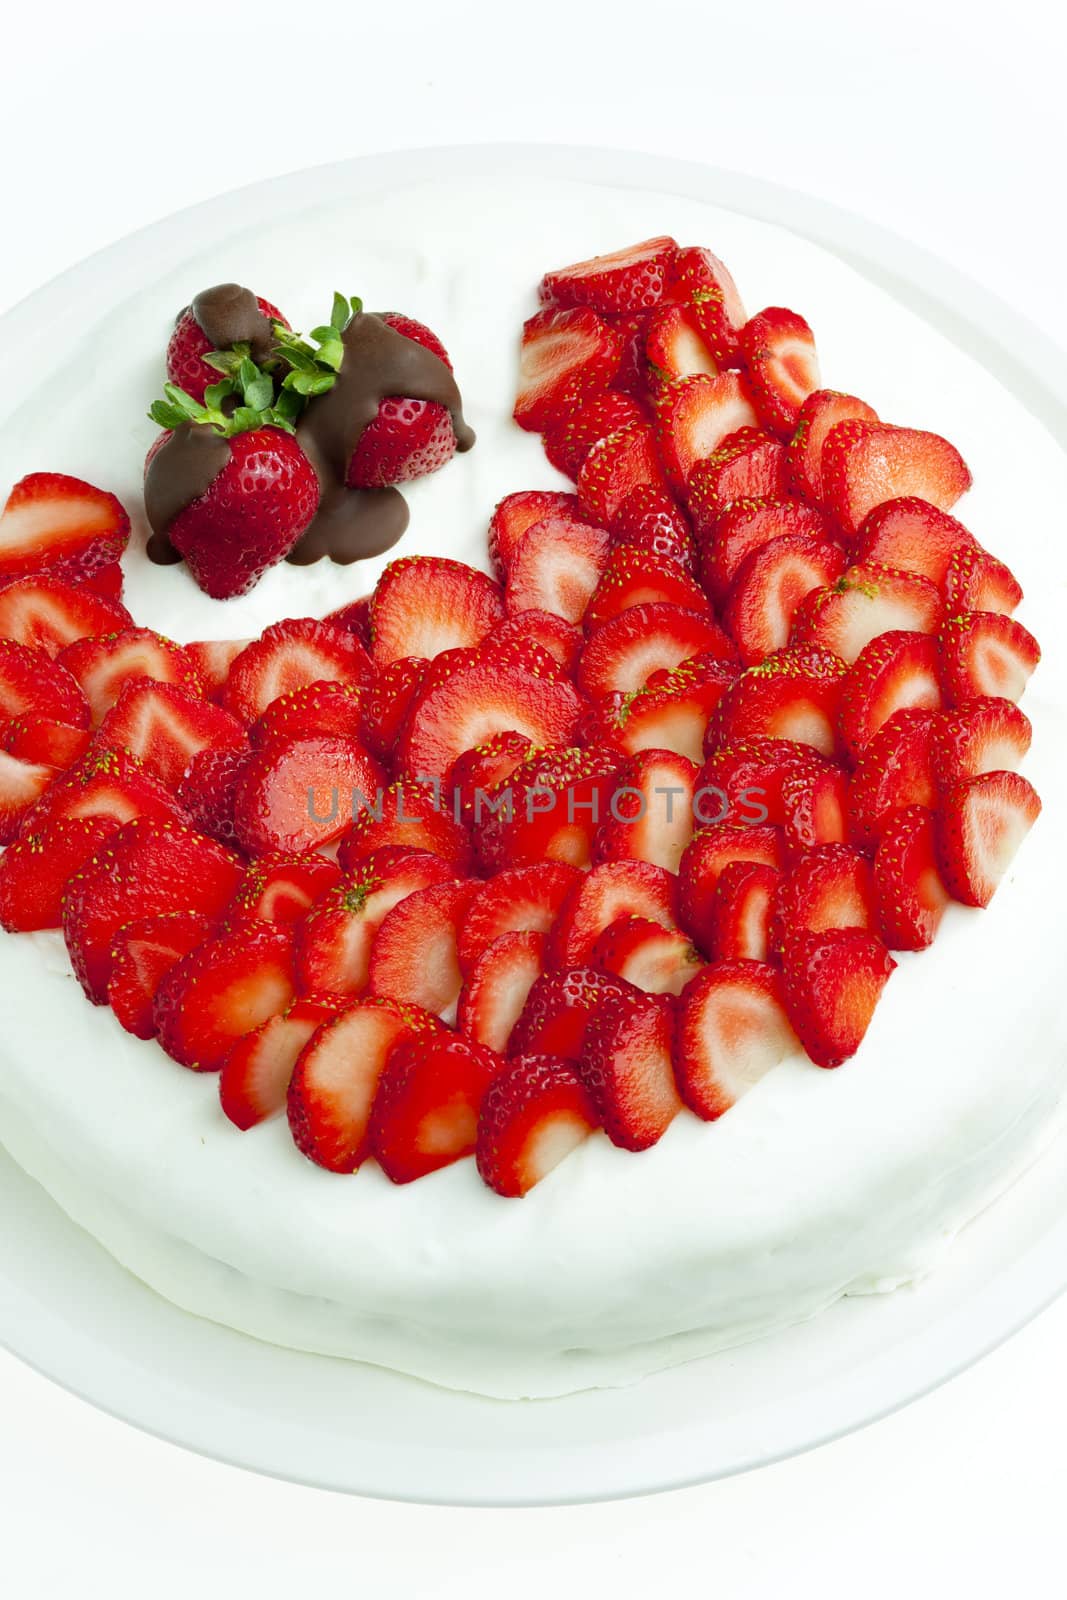 light yogurt cake with strawberries by phbcz